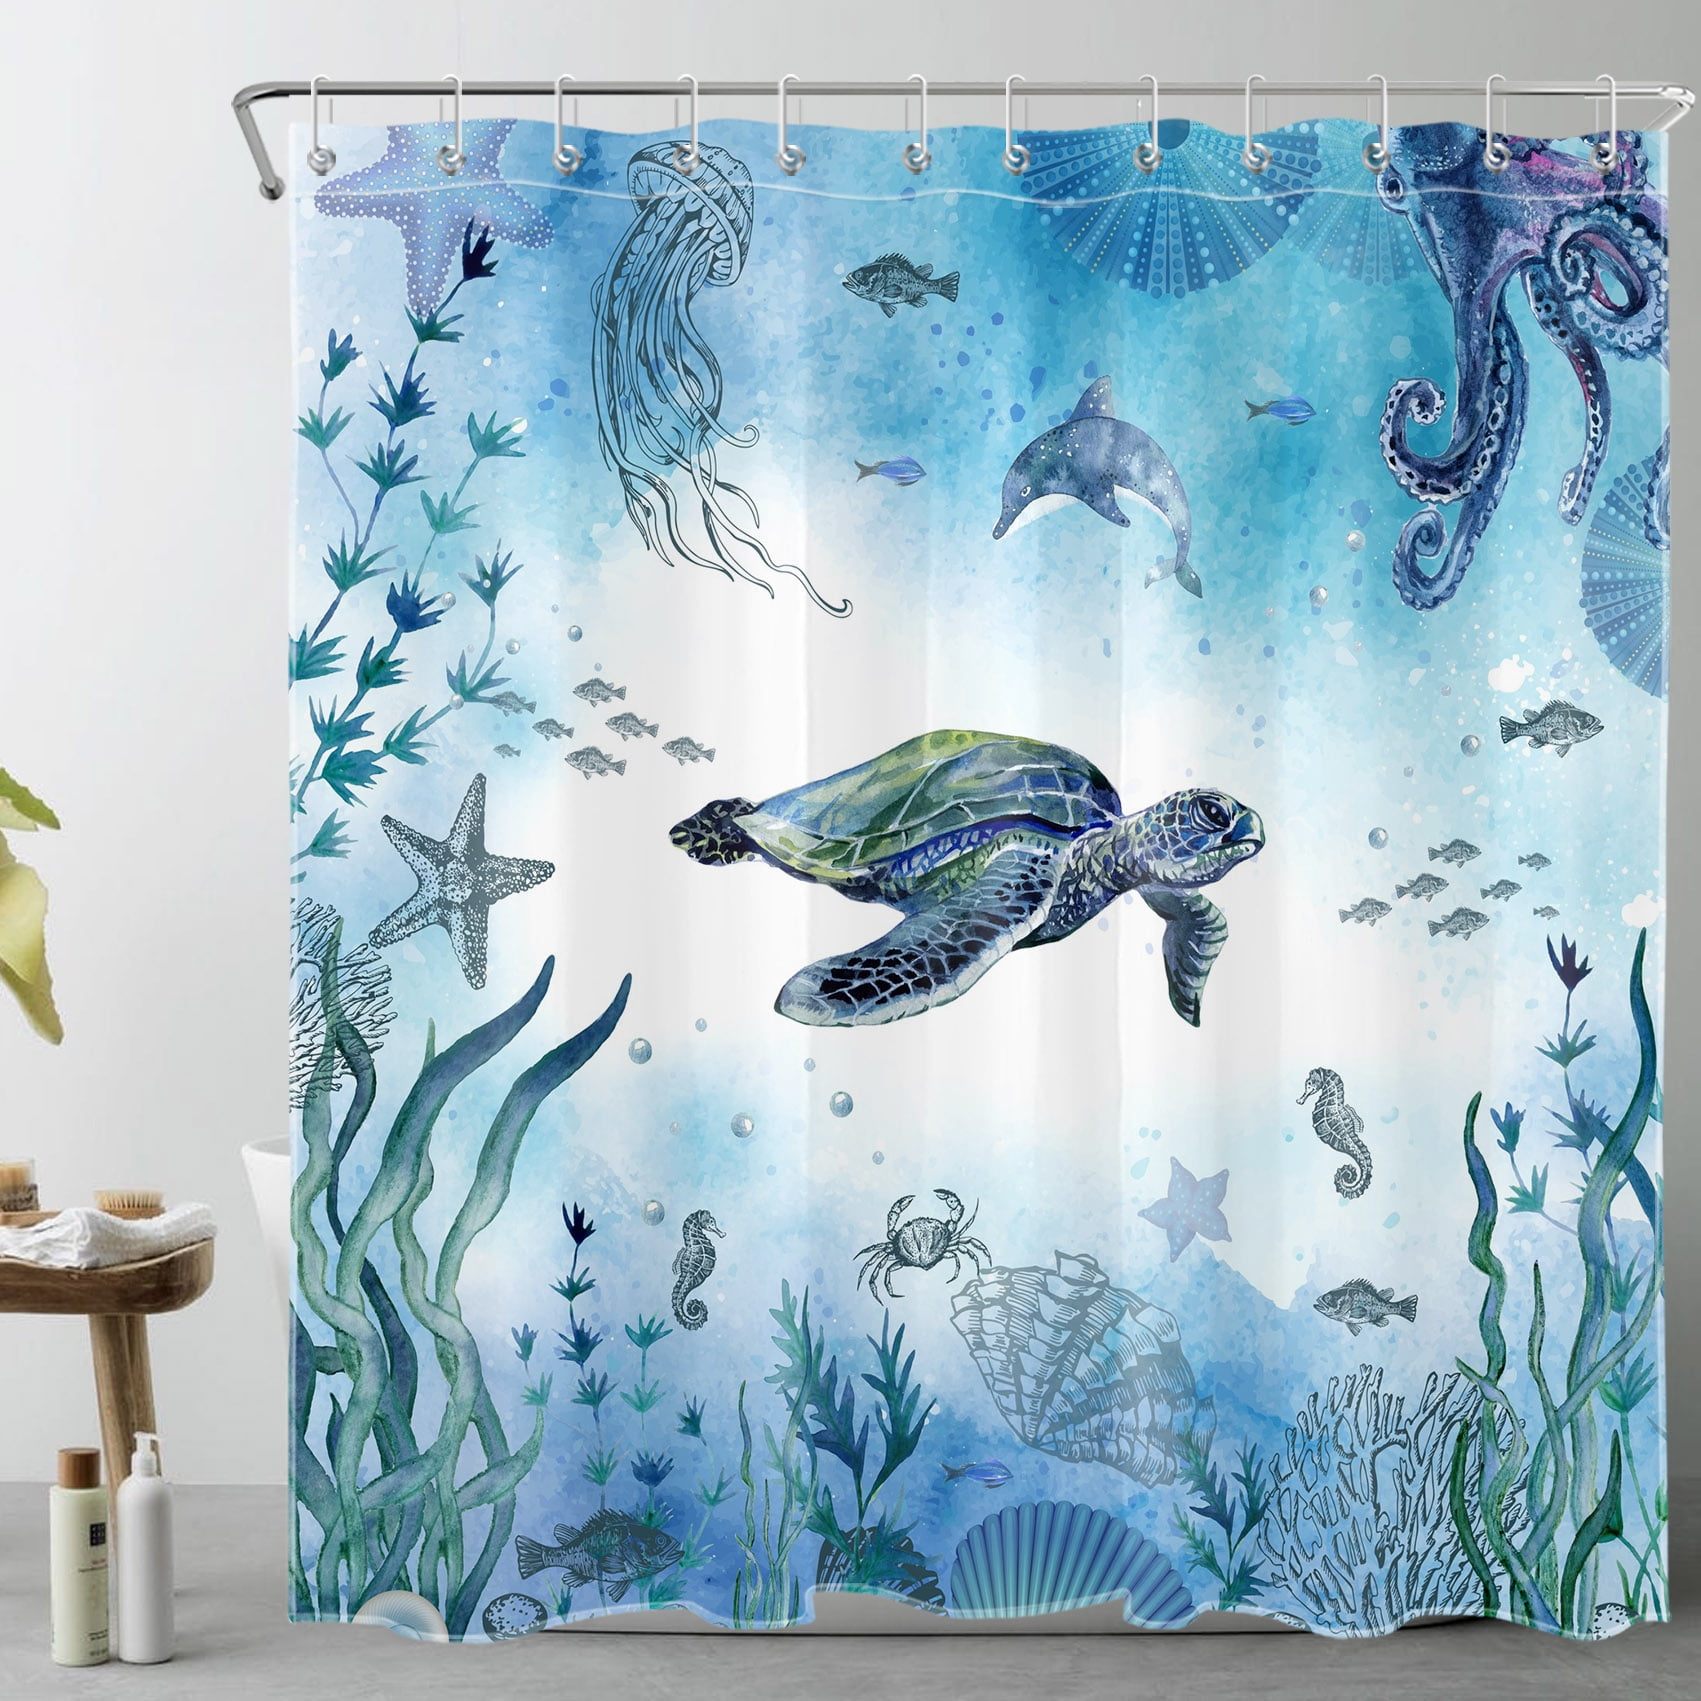 HVEST Funny Sea Turtle Shower Curtain for Bathroom Wild Marine